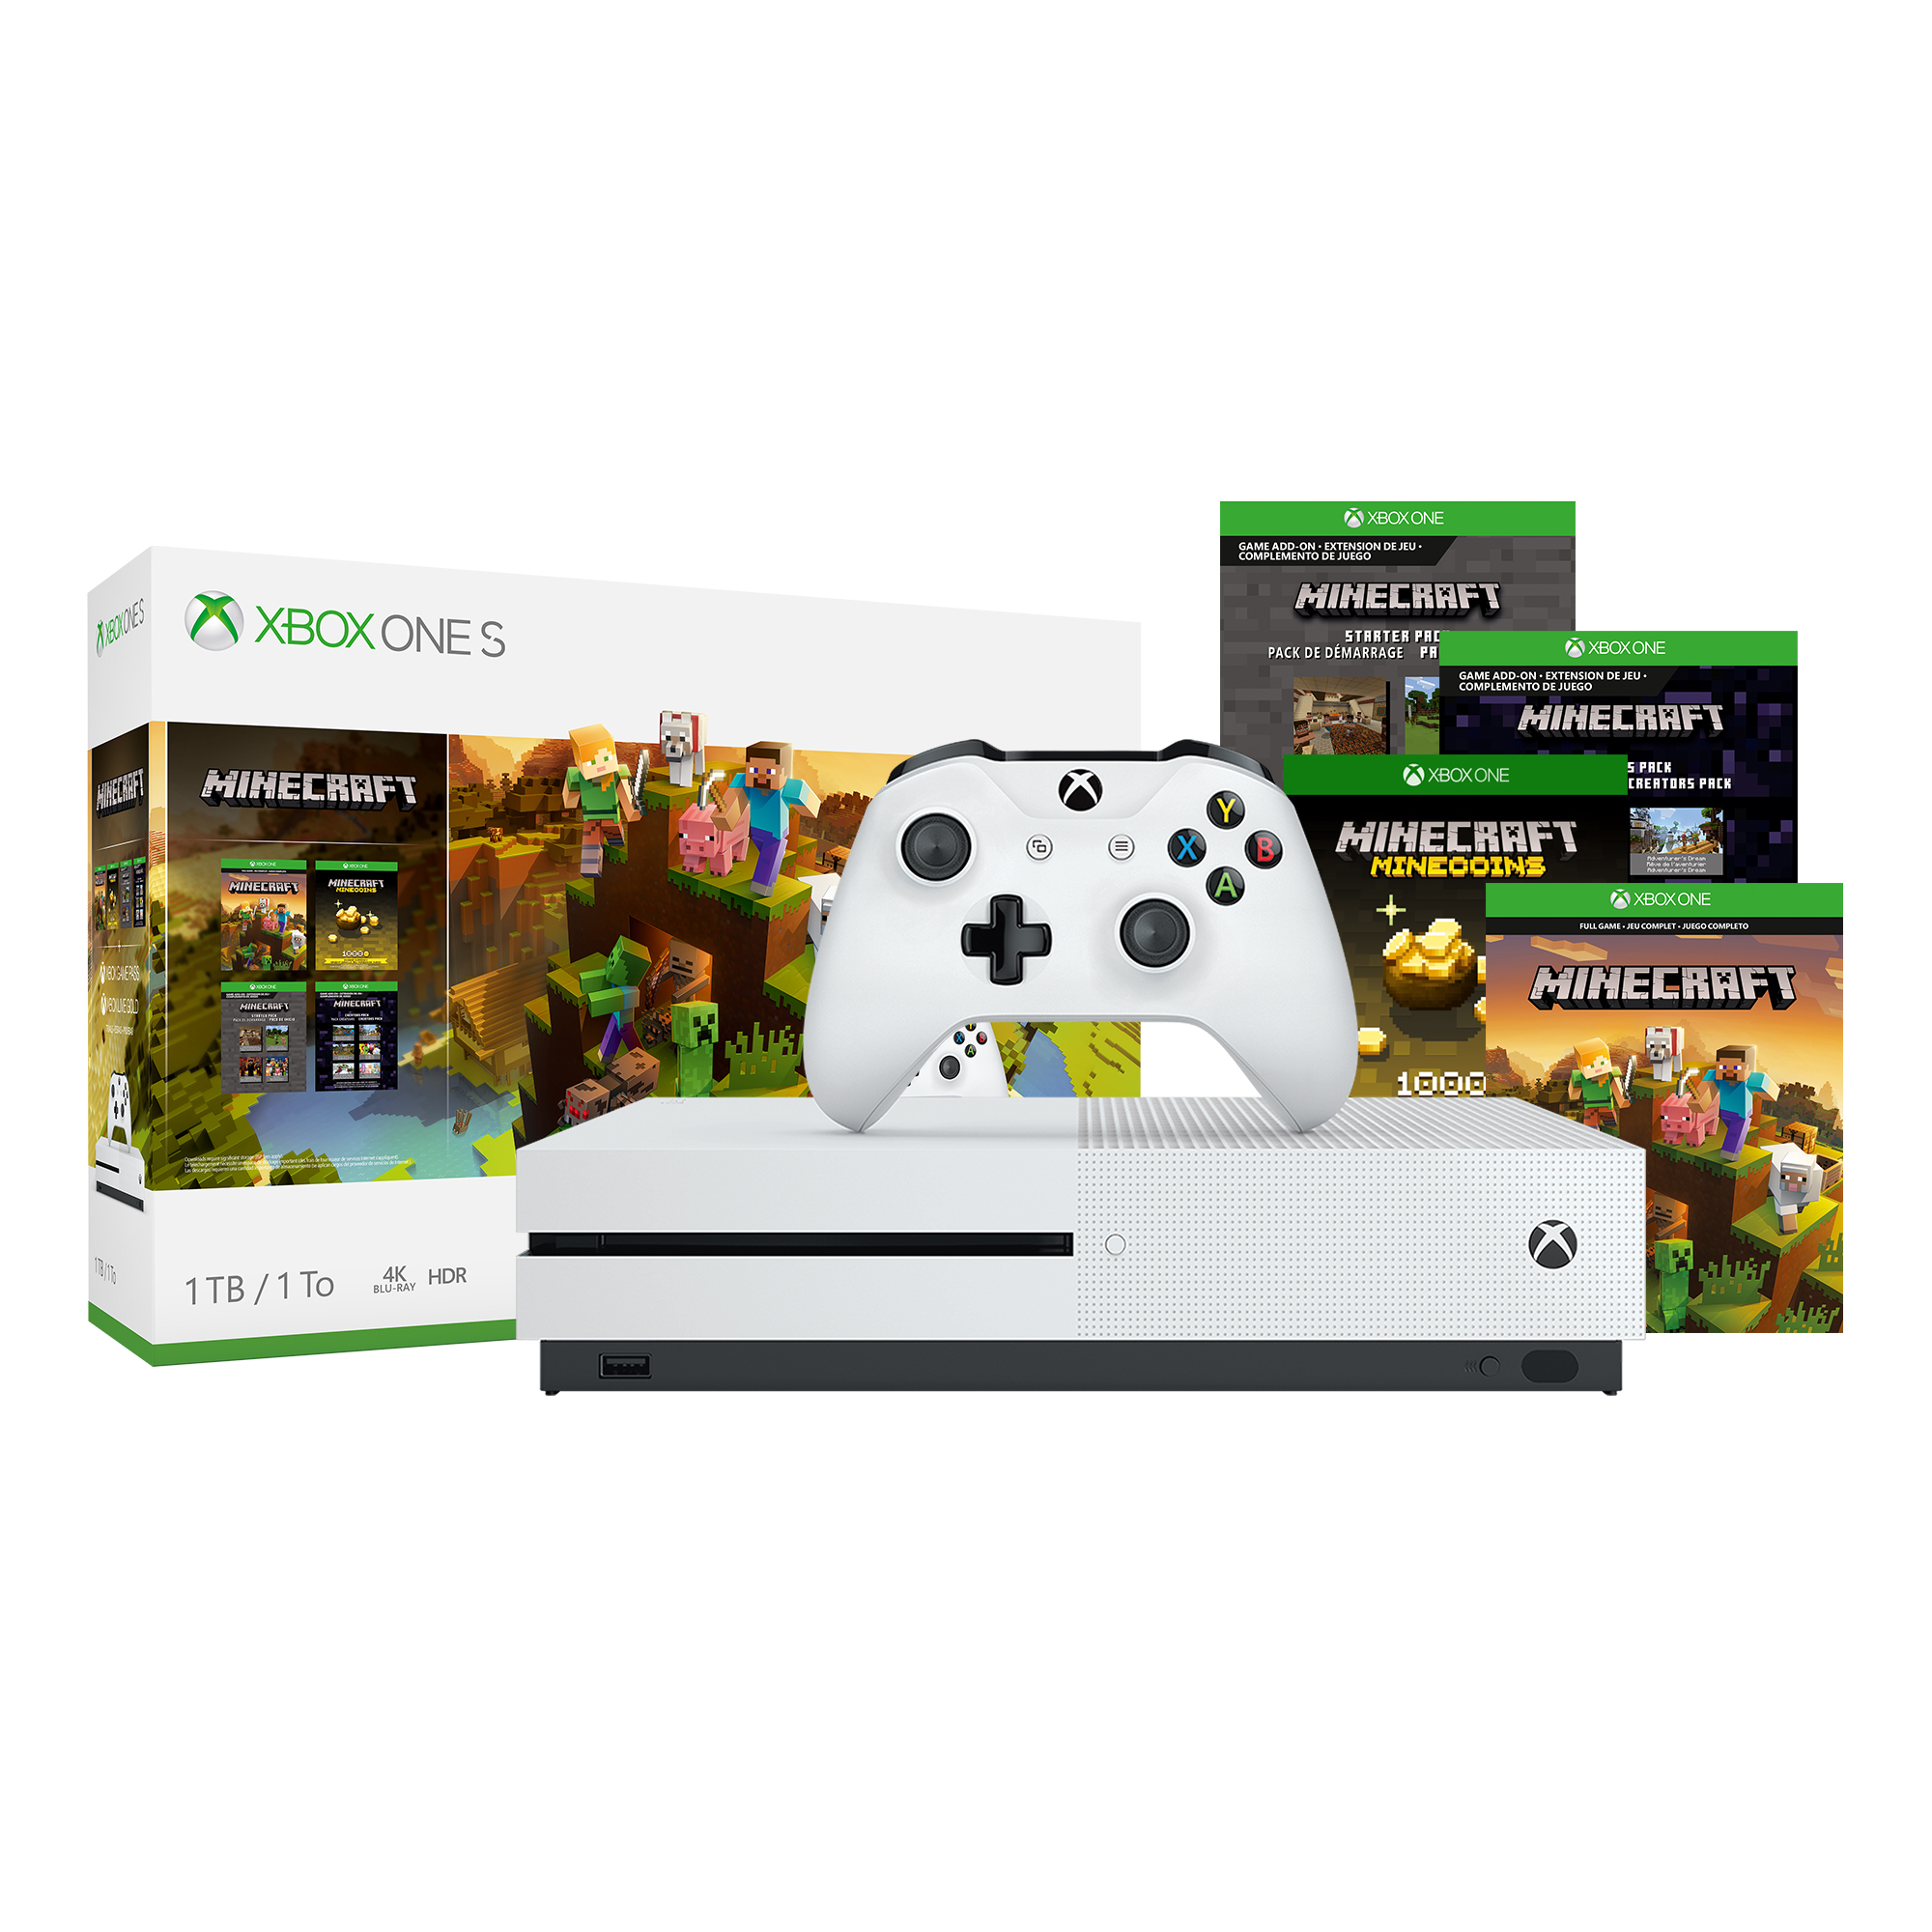 Microsoft Xbox One S 1TB Minecraft Creators Bundle, White, 234-00655 - image 3 of 18